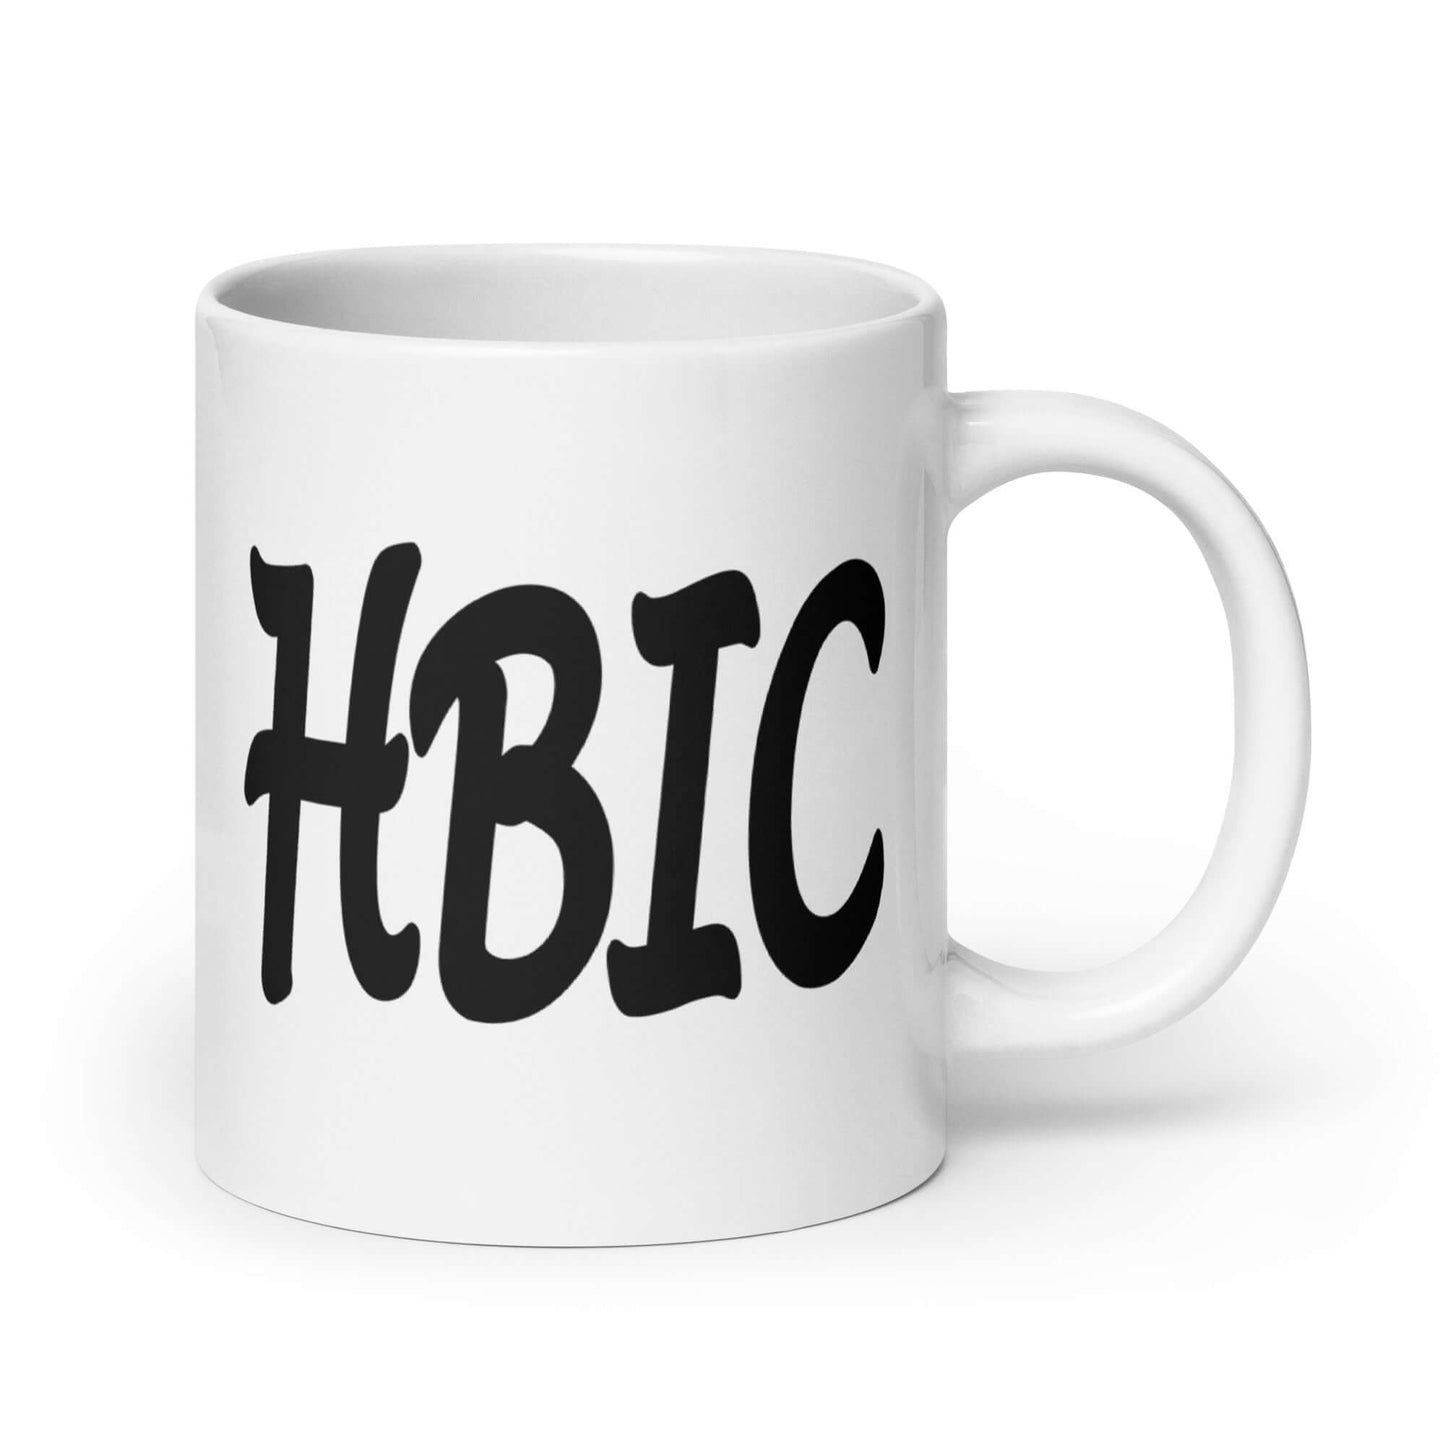 HBIC girl power coffee mug